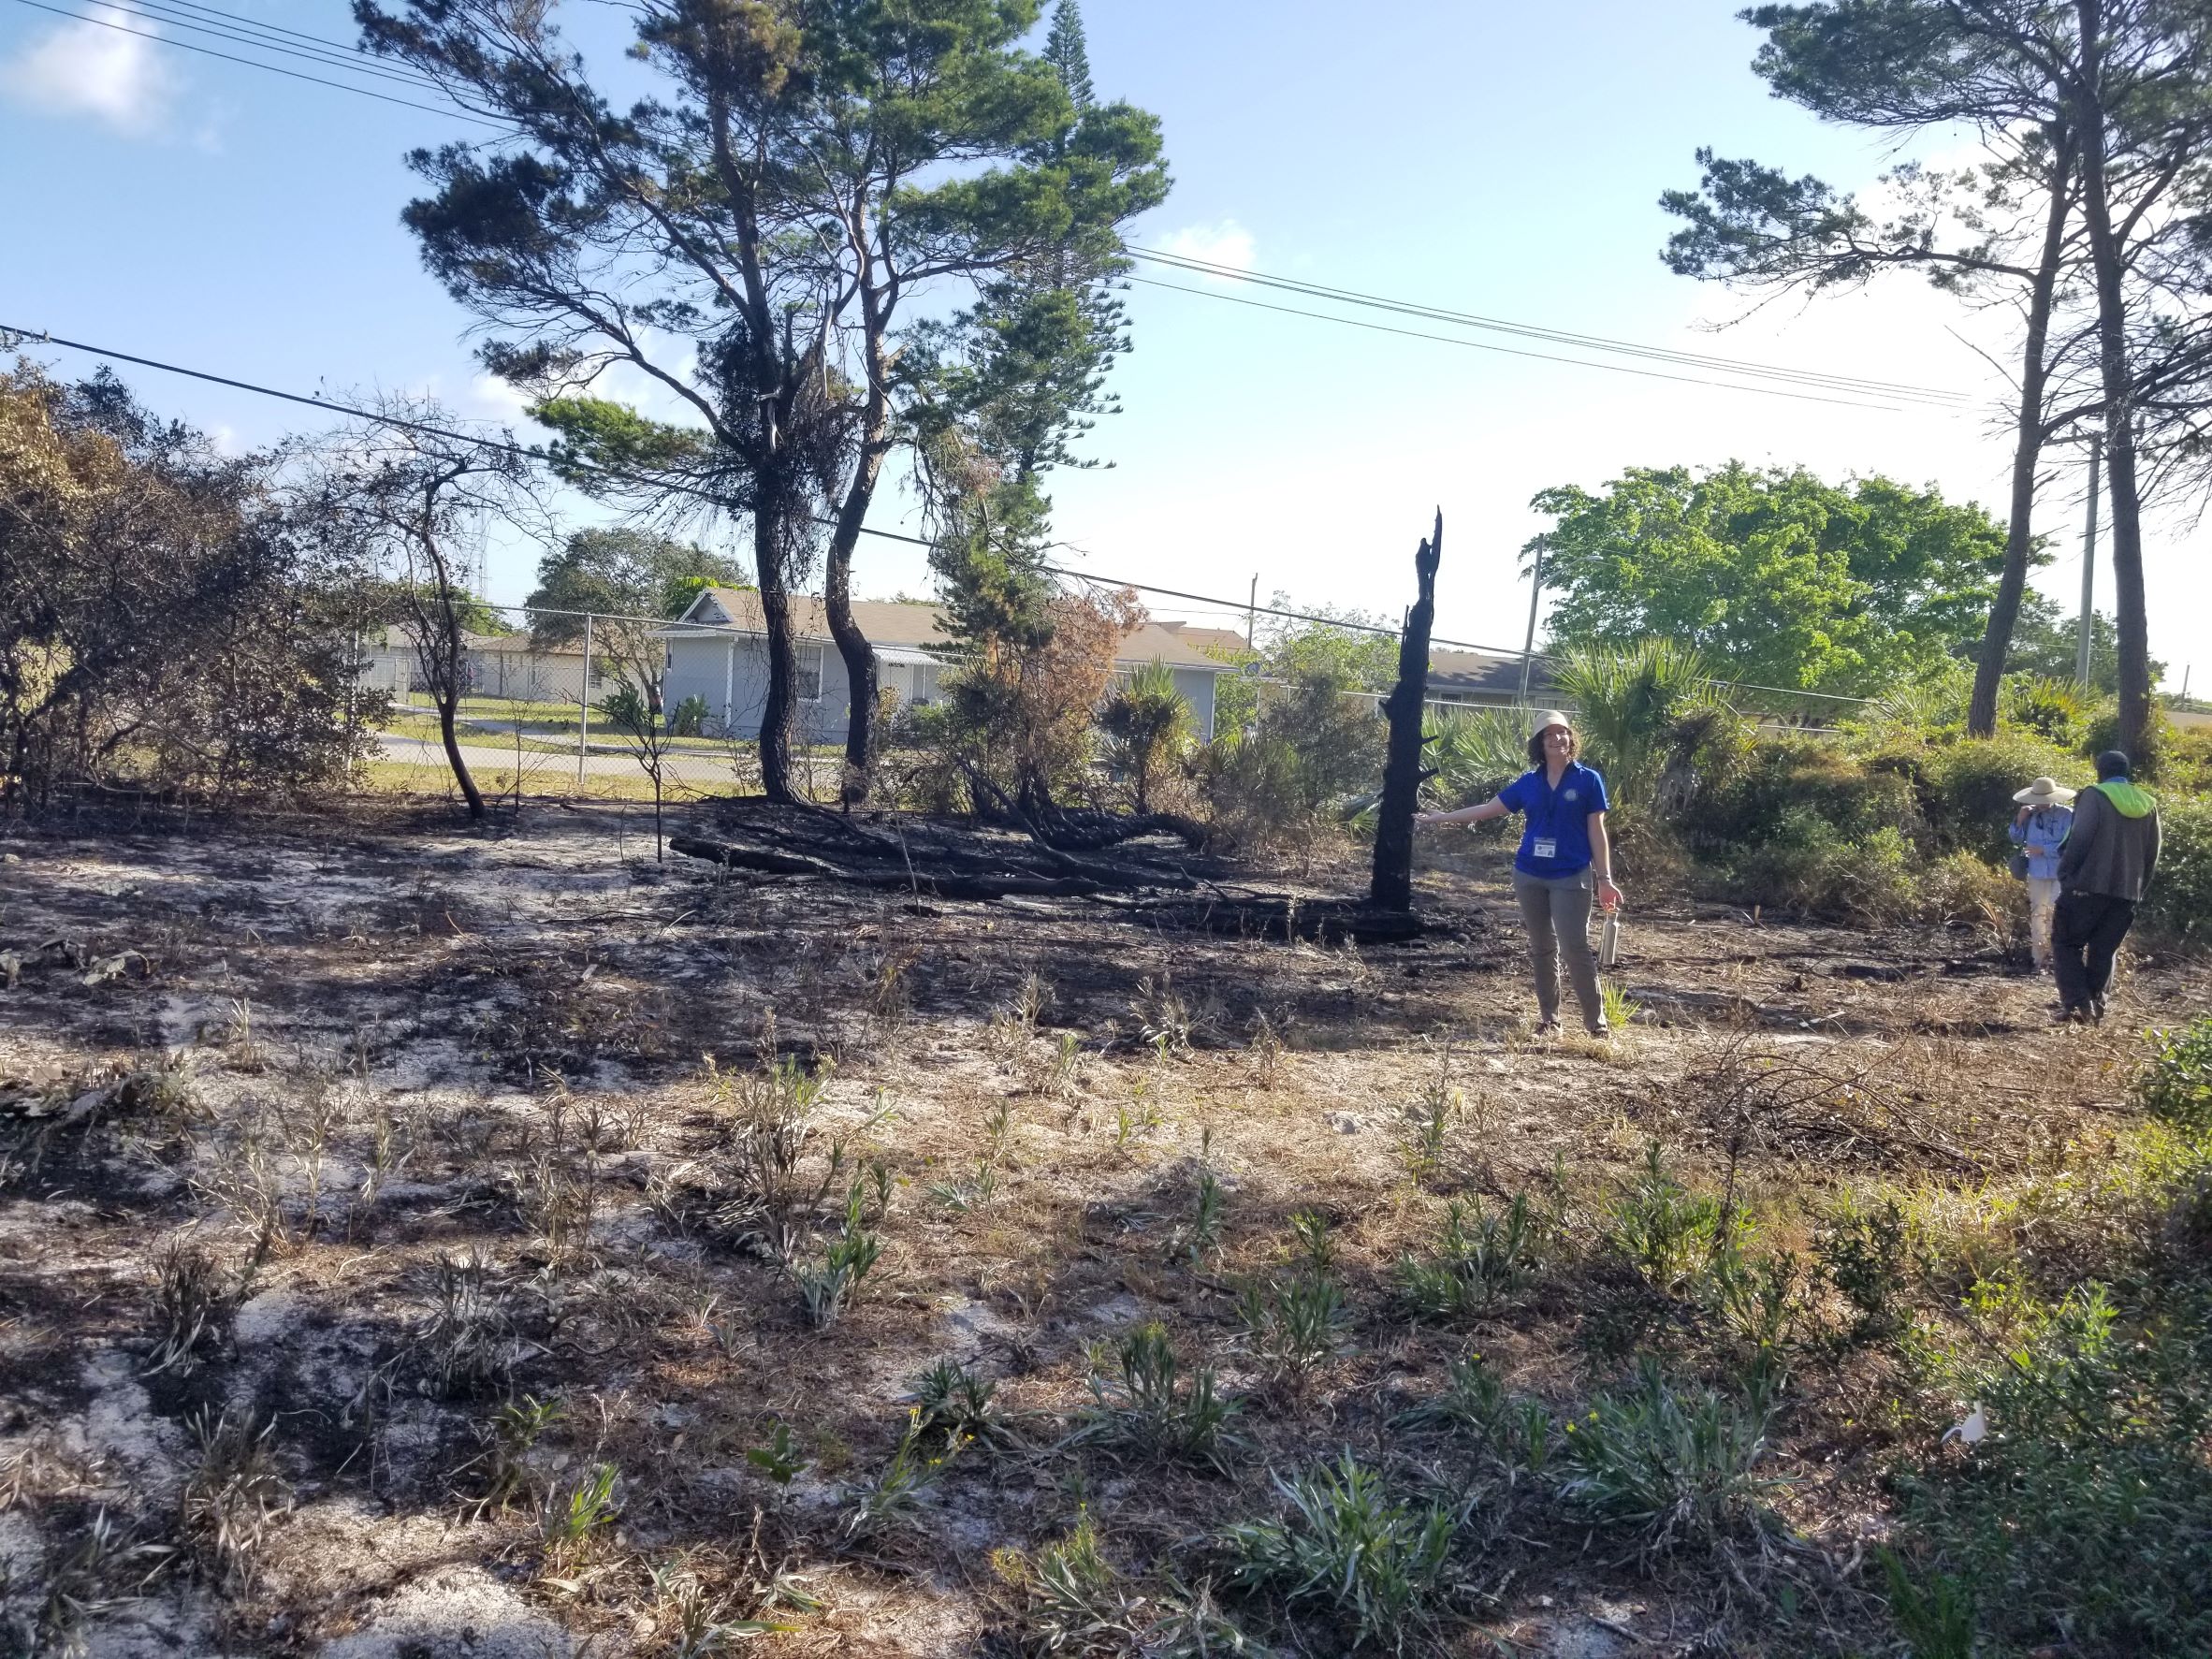 After the burn at Galaxy Sandi Pine Preserve